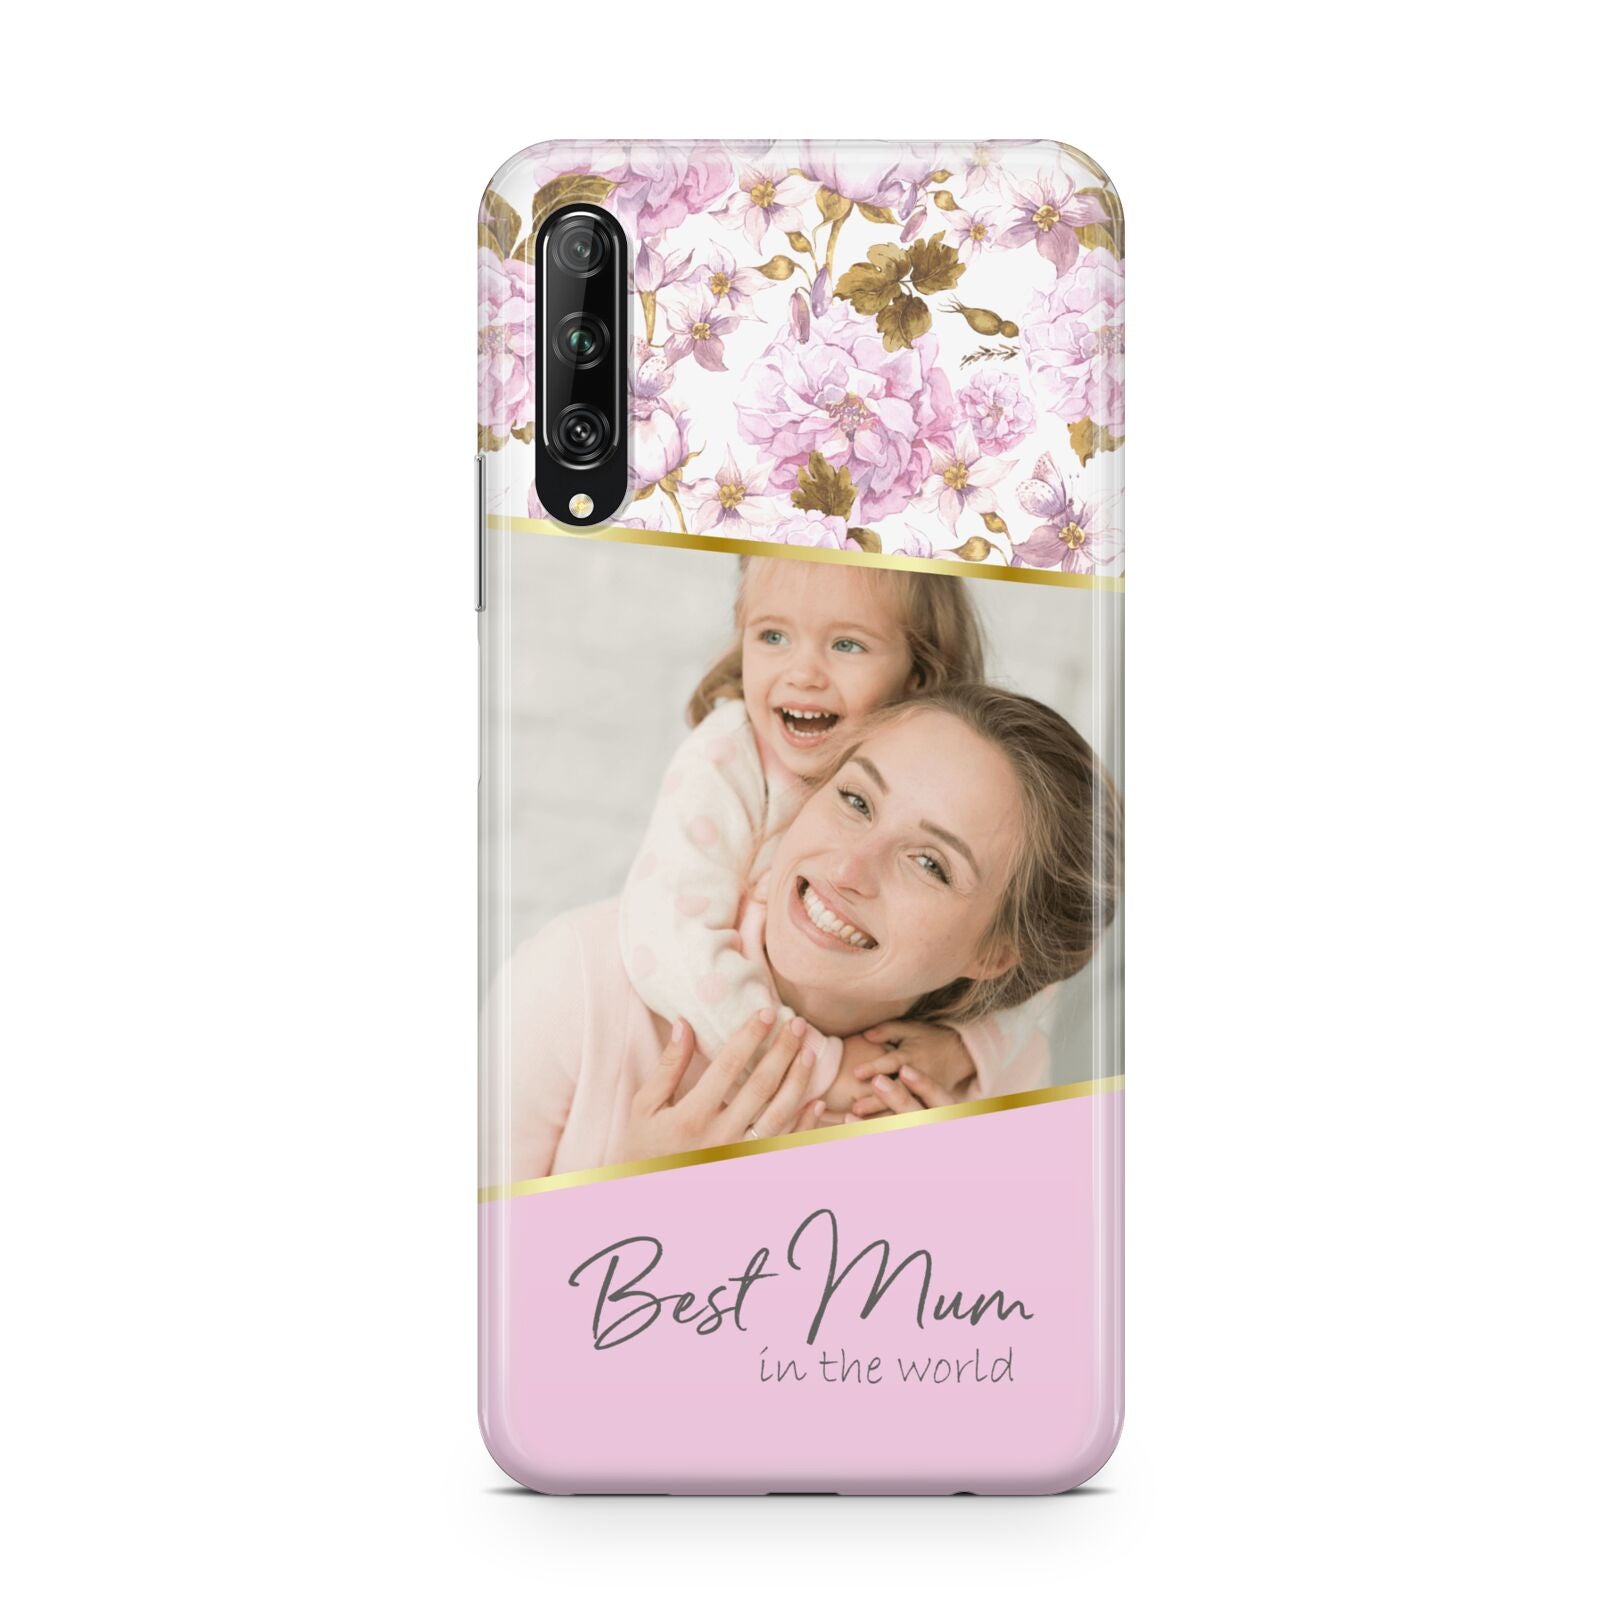 Personalised Love You Mum Huawei P Smart Pro 2019